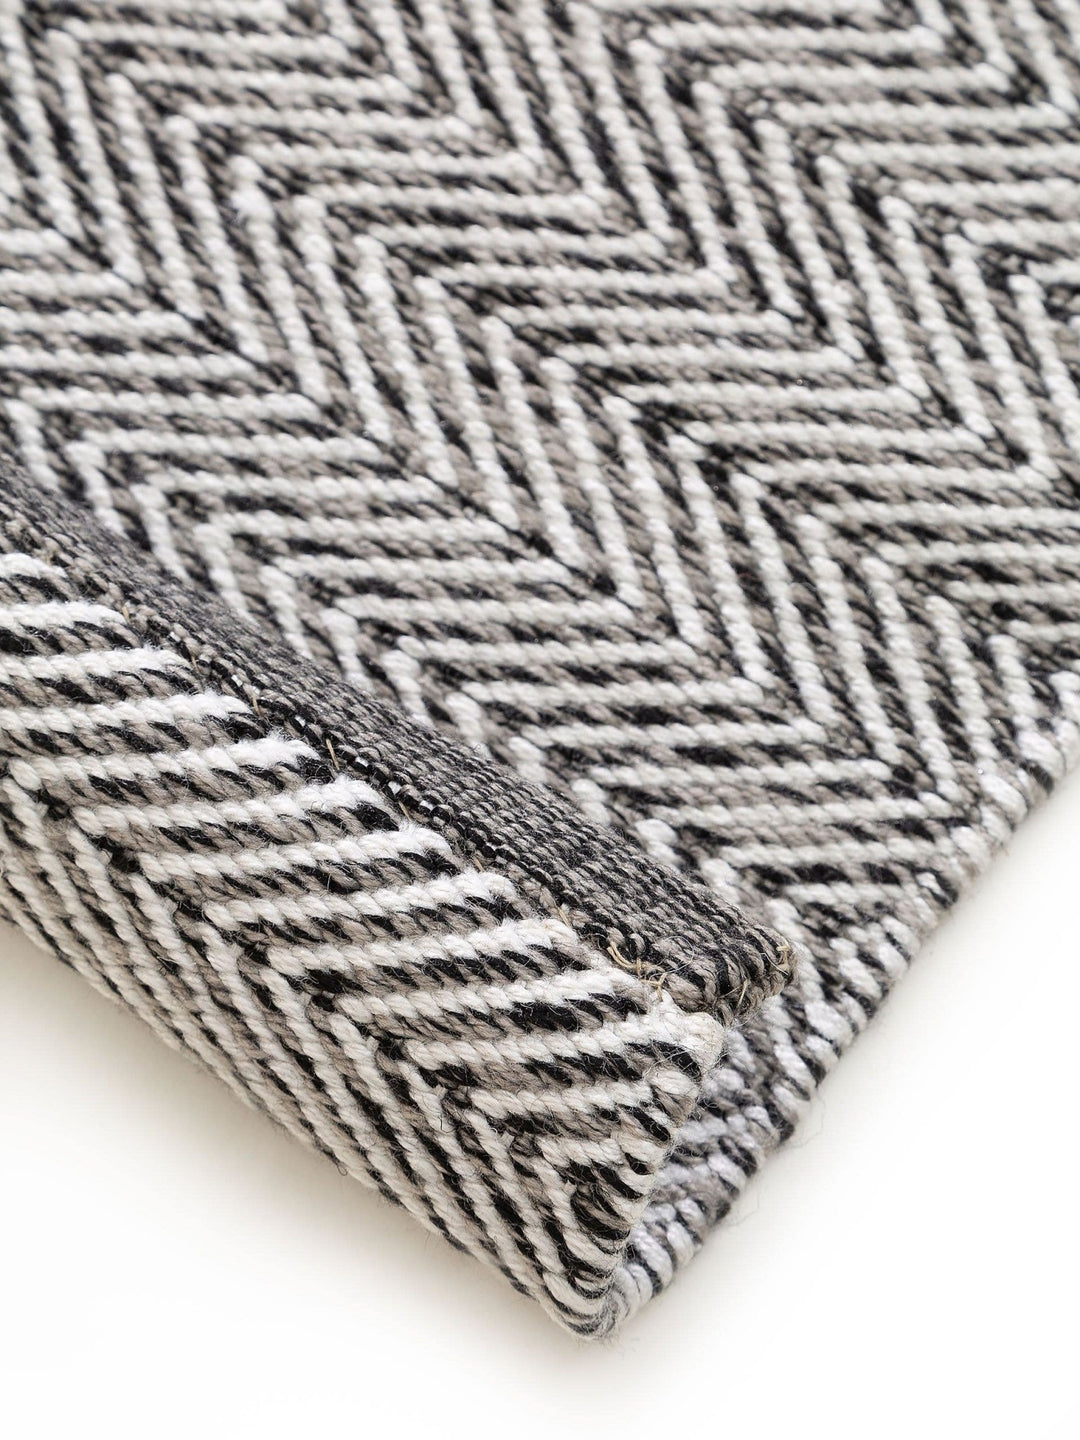 Teppich aus recyceltem Material Rio Grau - benuta PLUS - RugDreams®